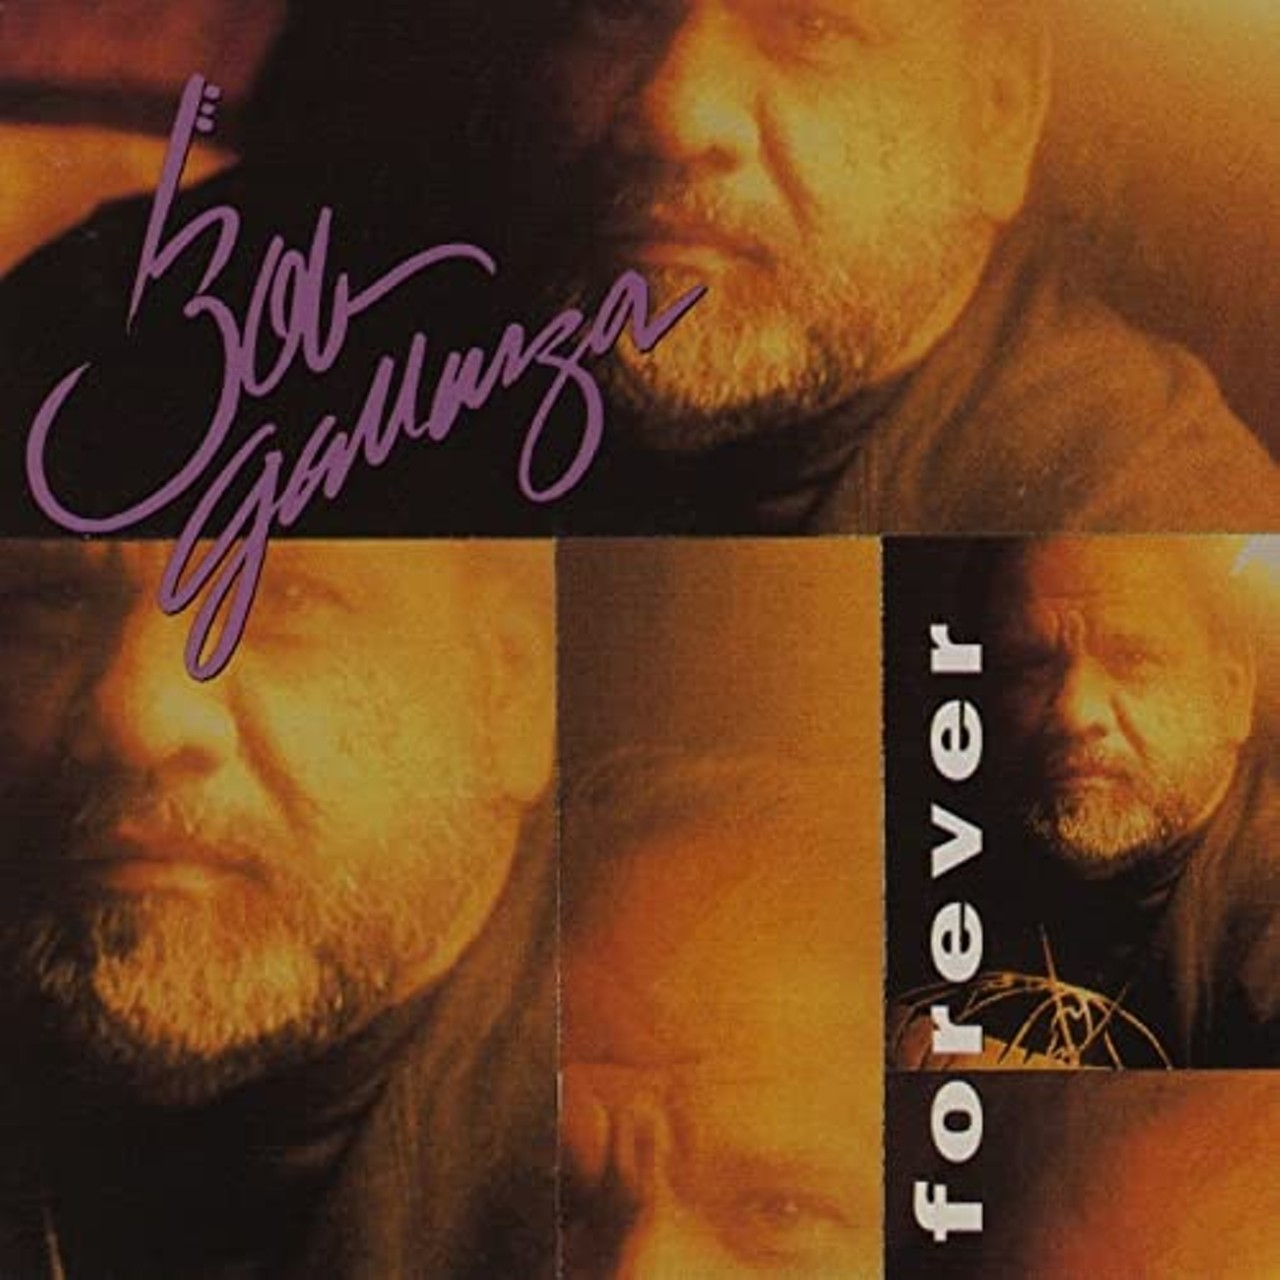 19. Bob Gallarza, Ram Herrera "I've Got a Neverending Love"